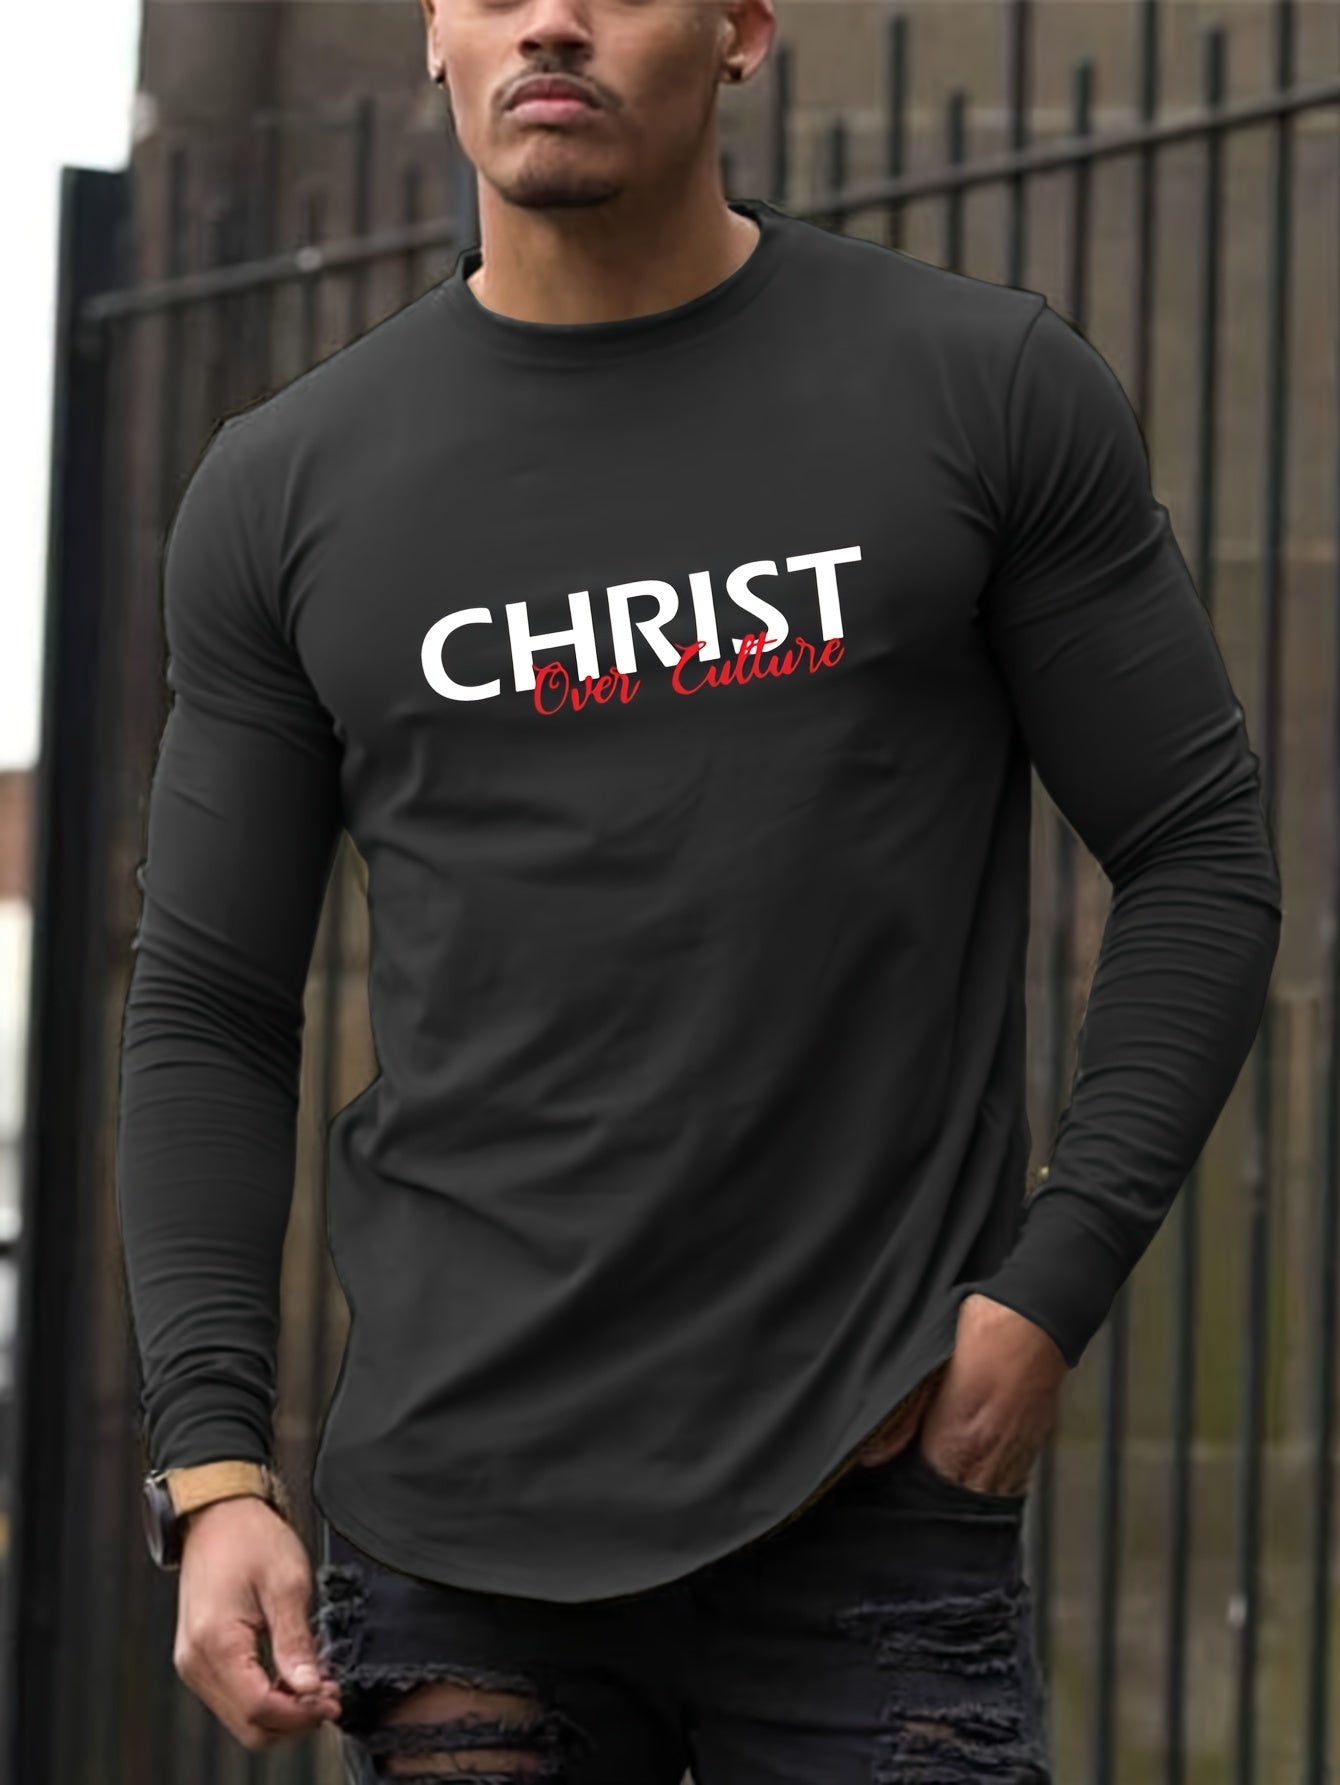 Christ Over Culture Men's Christian Pullover Sweatshirt claimedbygoddesigns